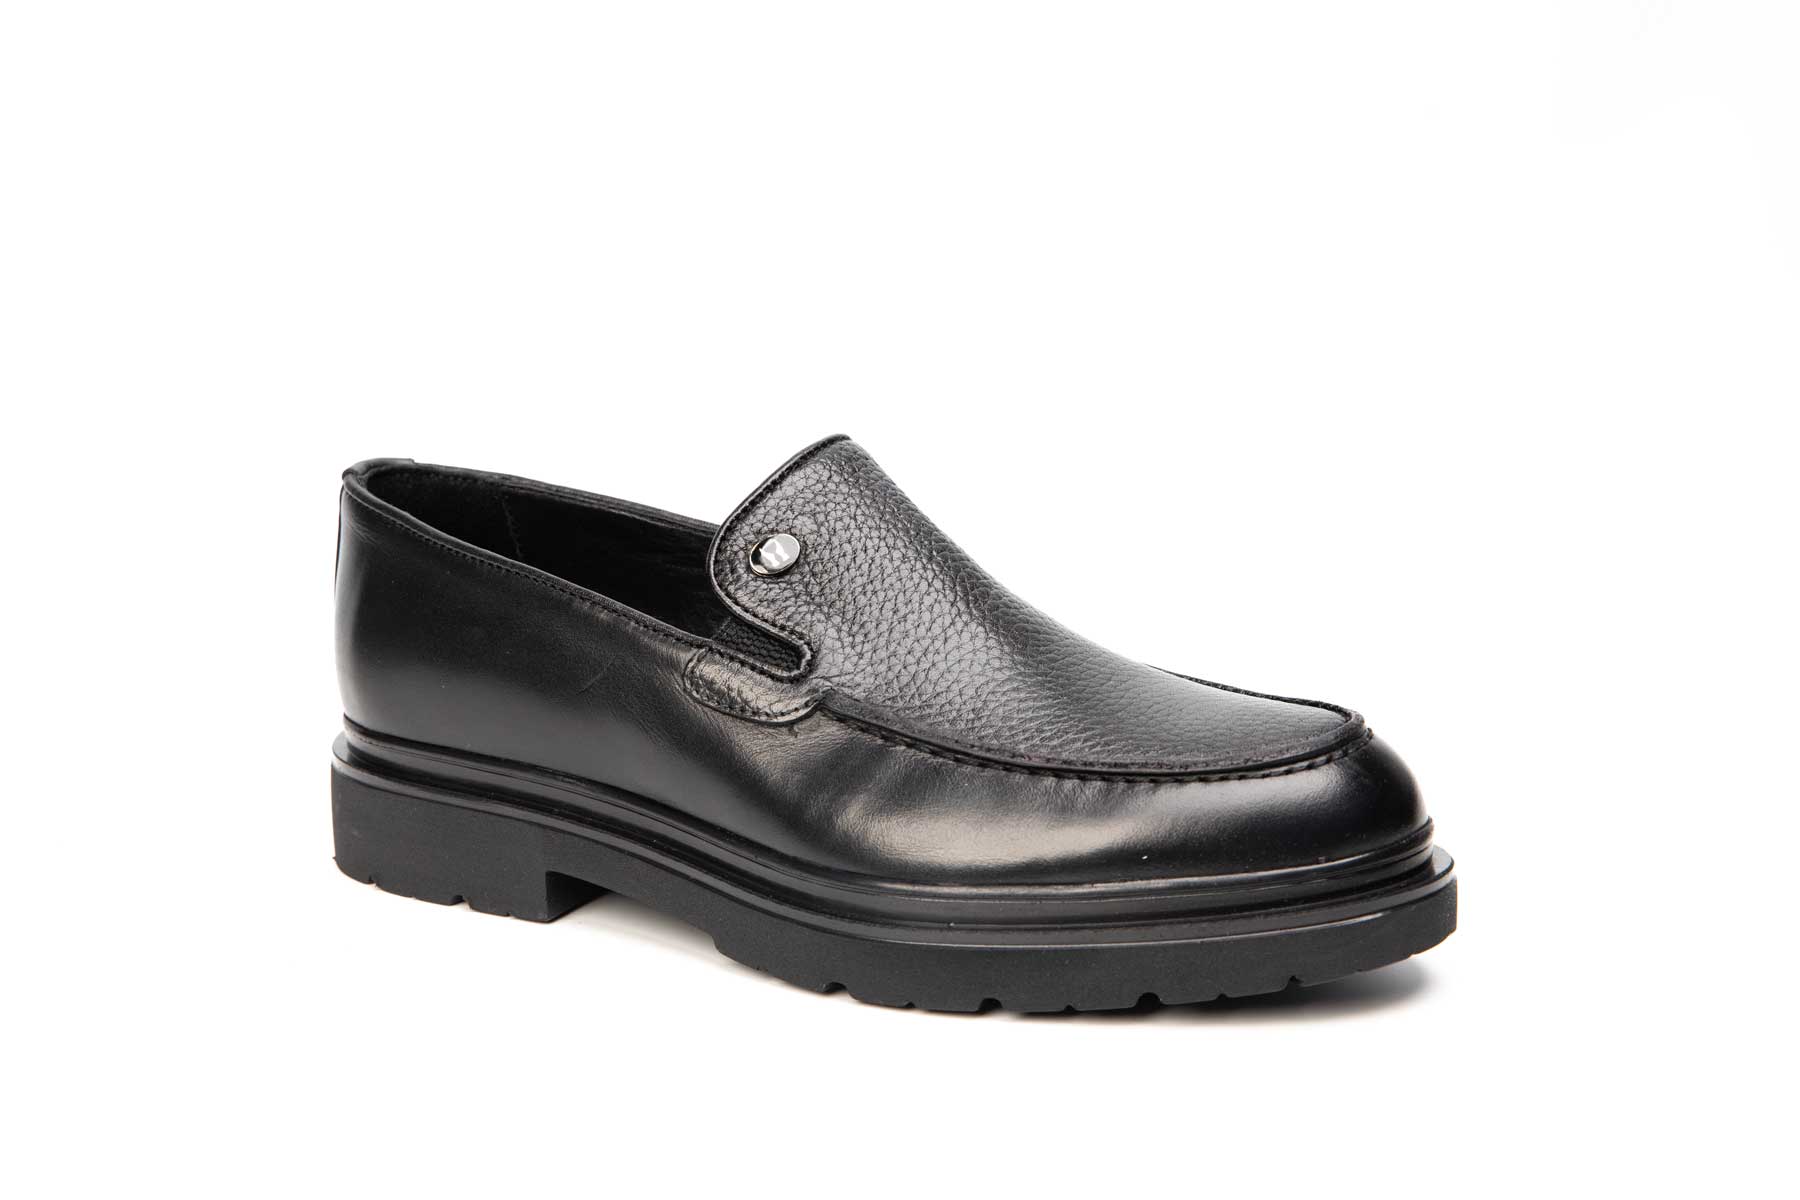 Pantofi barbati casual piele naturala Z01 negru box